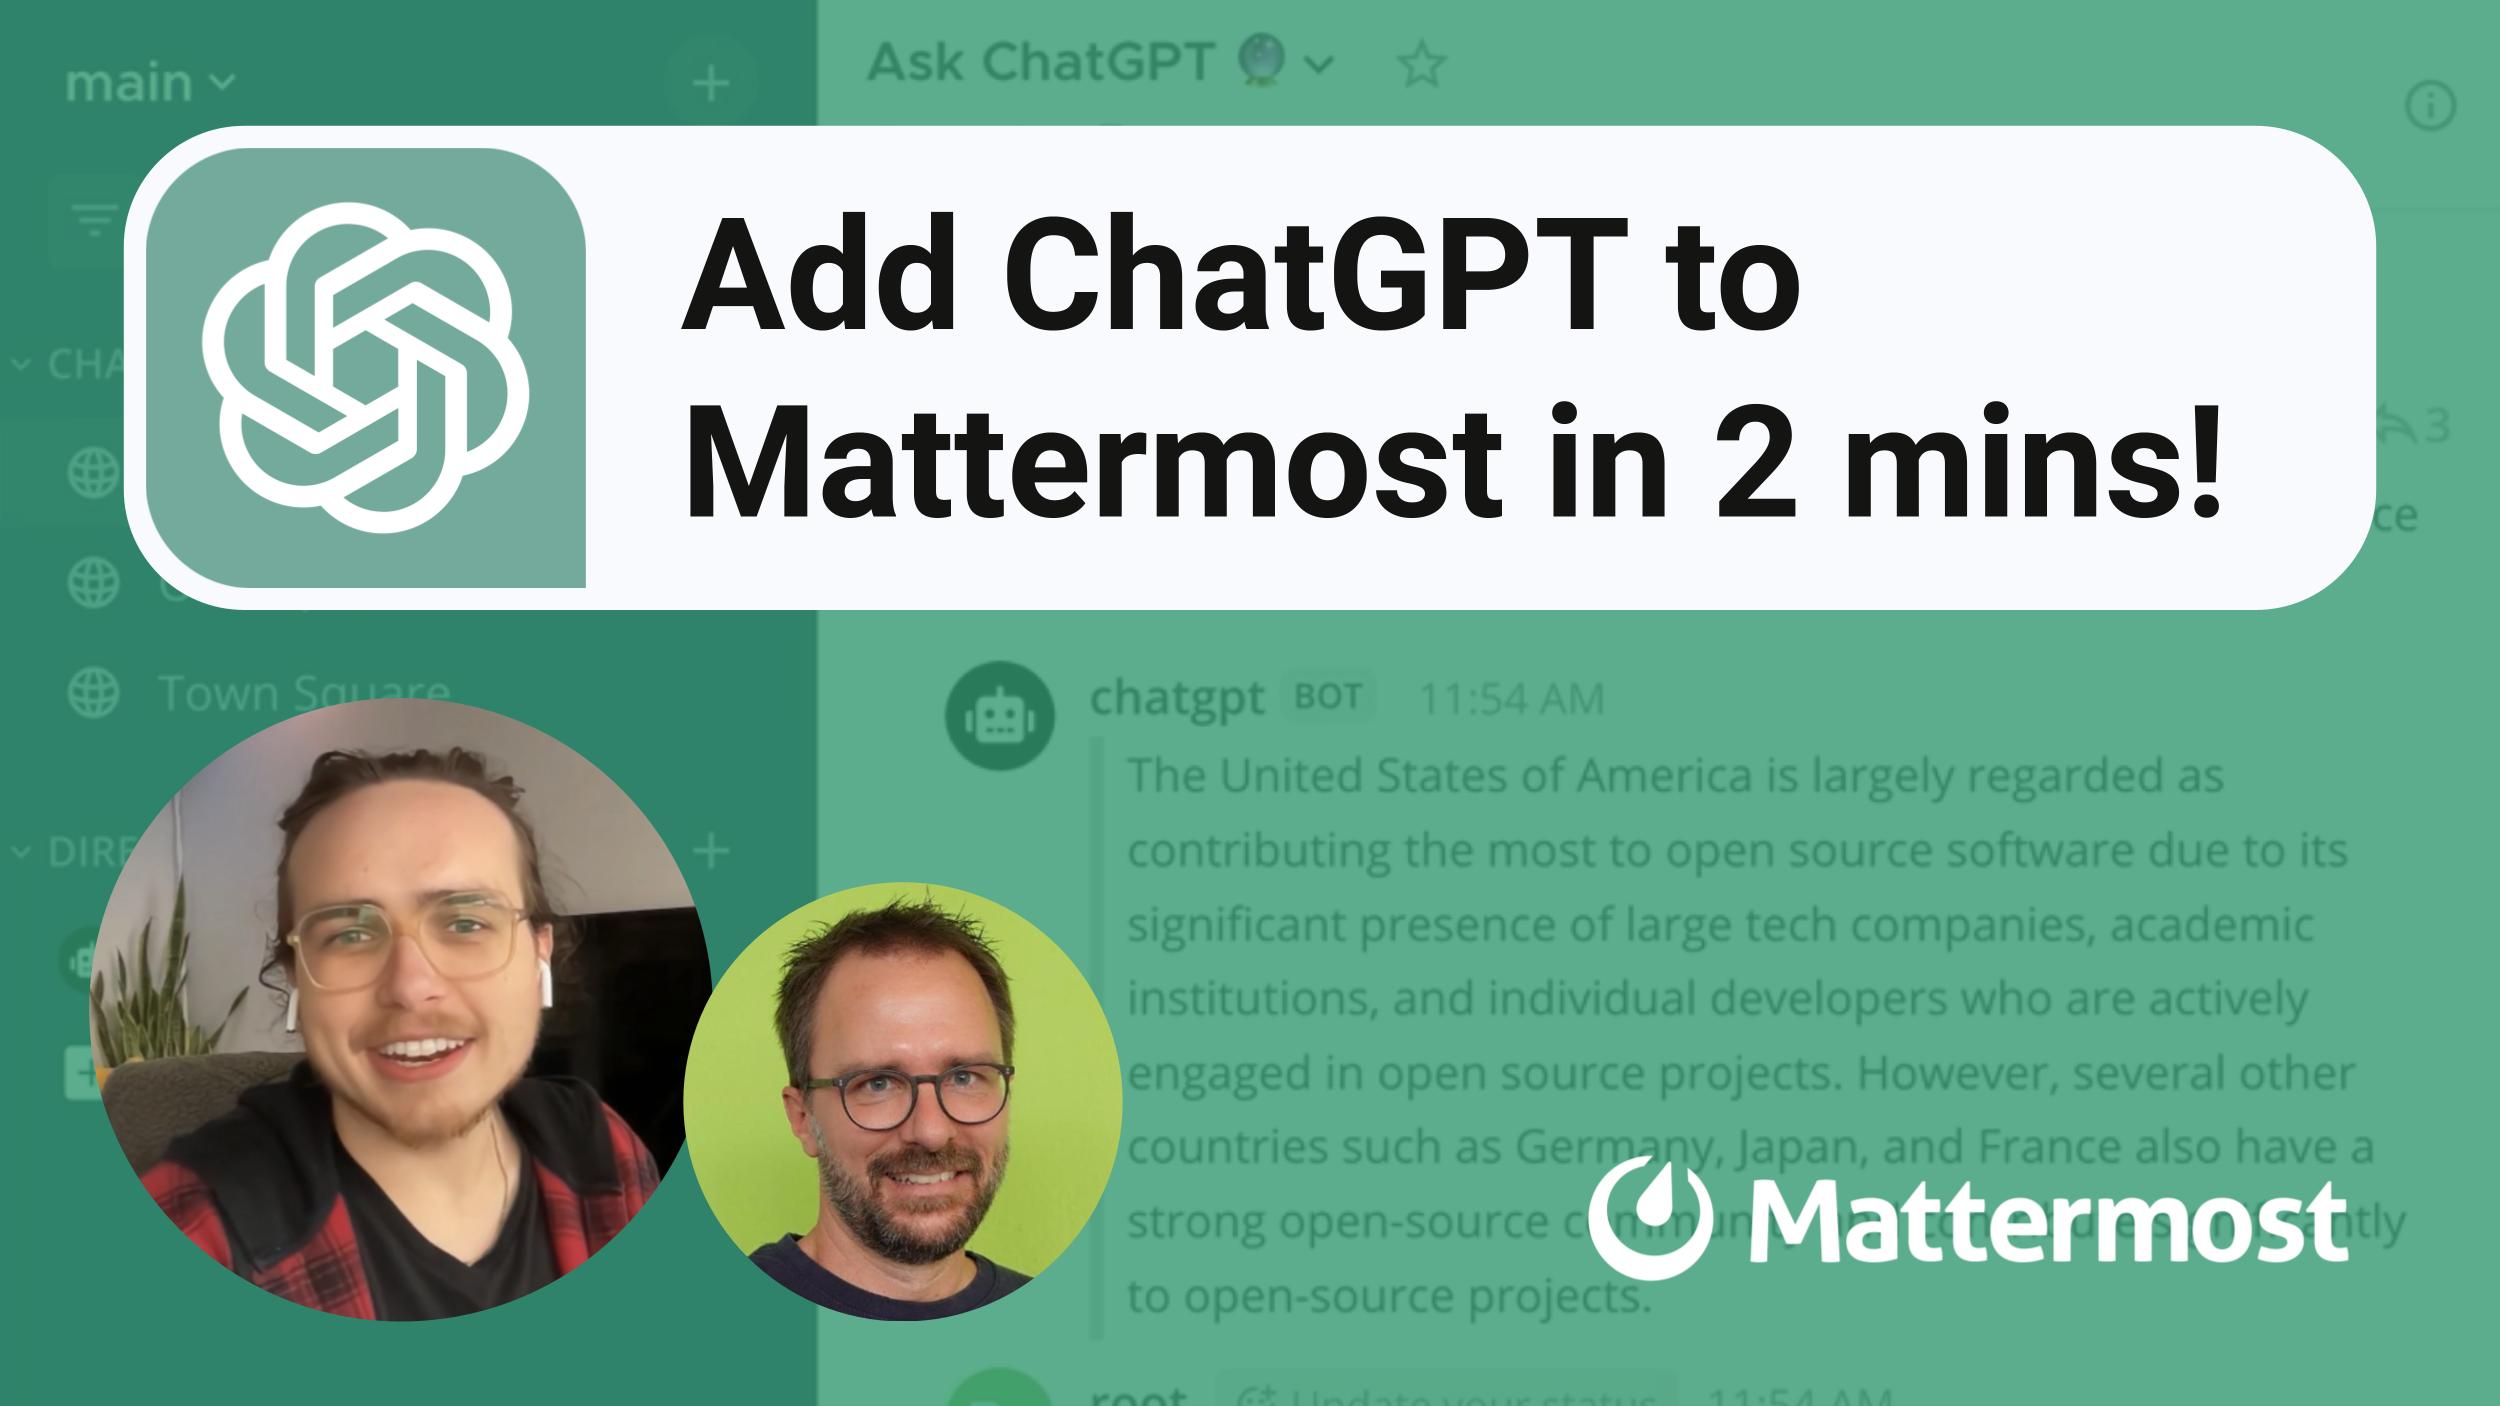 Adding ChatGPT to Mattermost